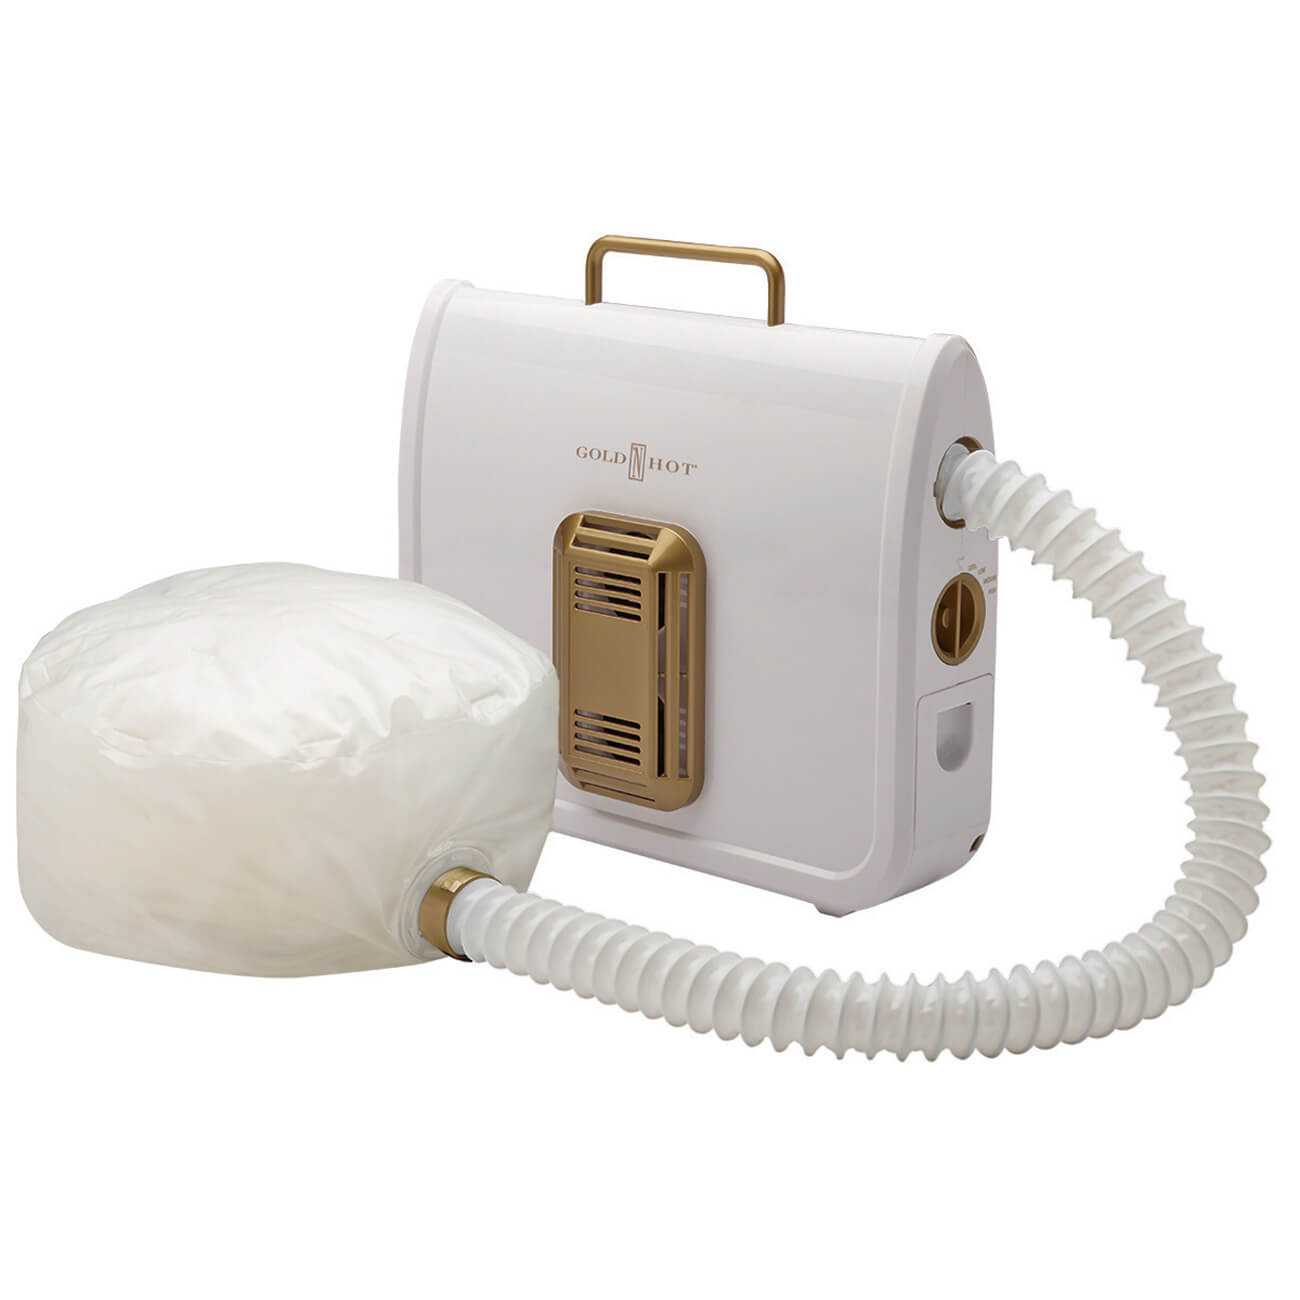 Gold 'N Hot Professional Ionic Soft Bonnet Hair Dryer